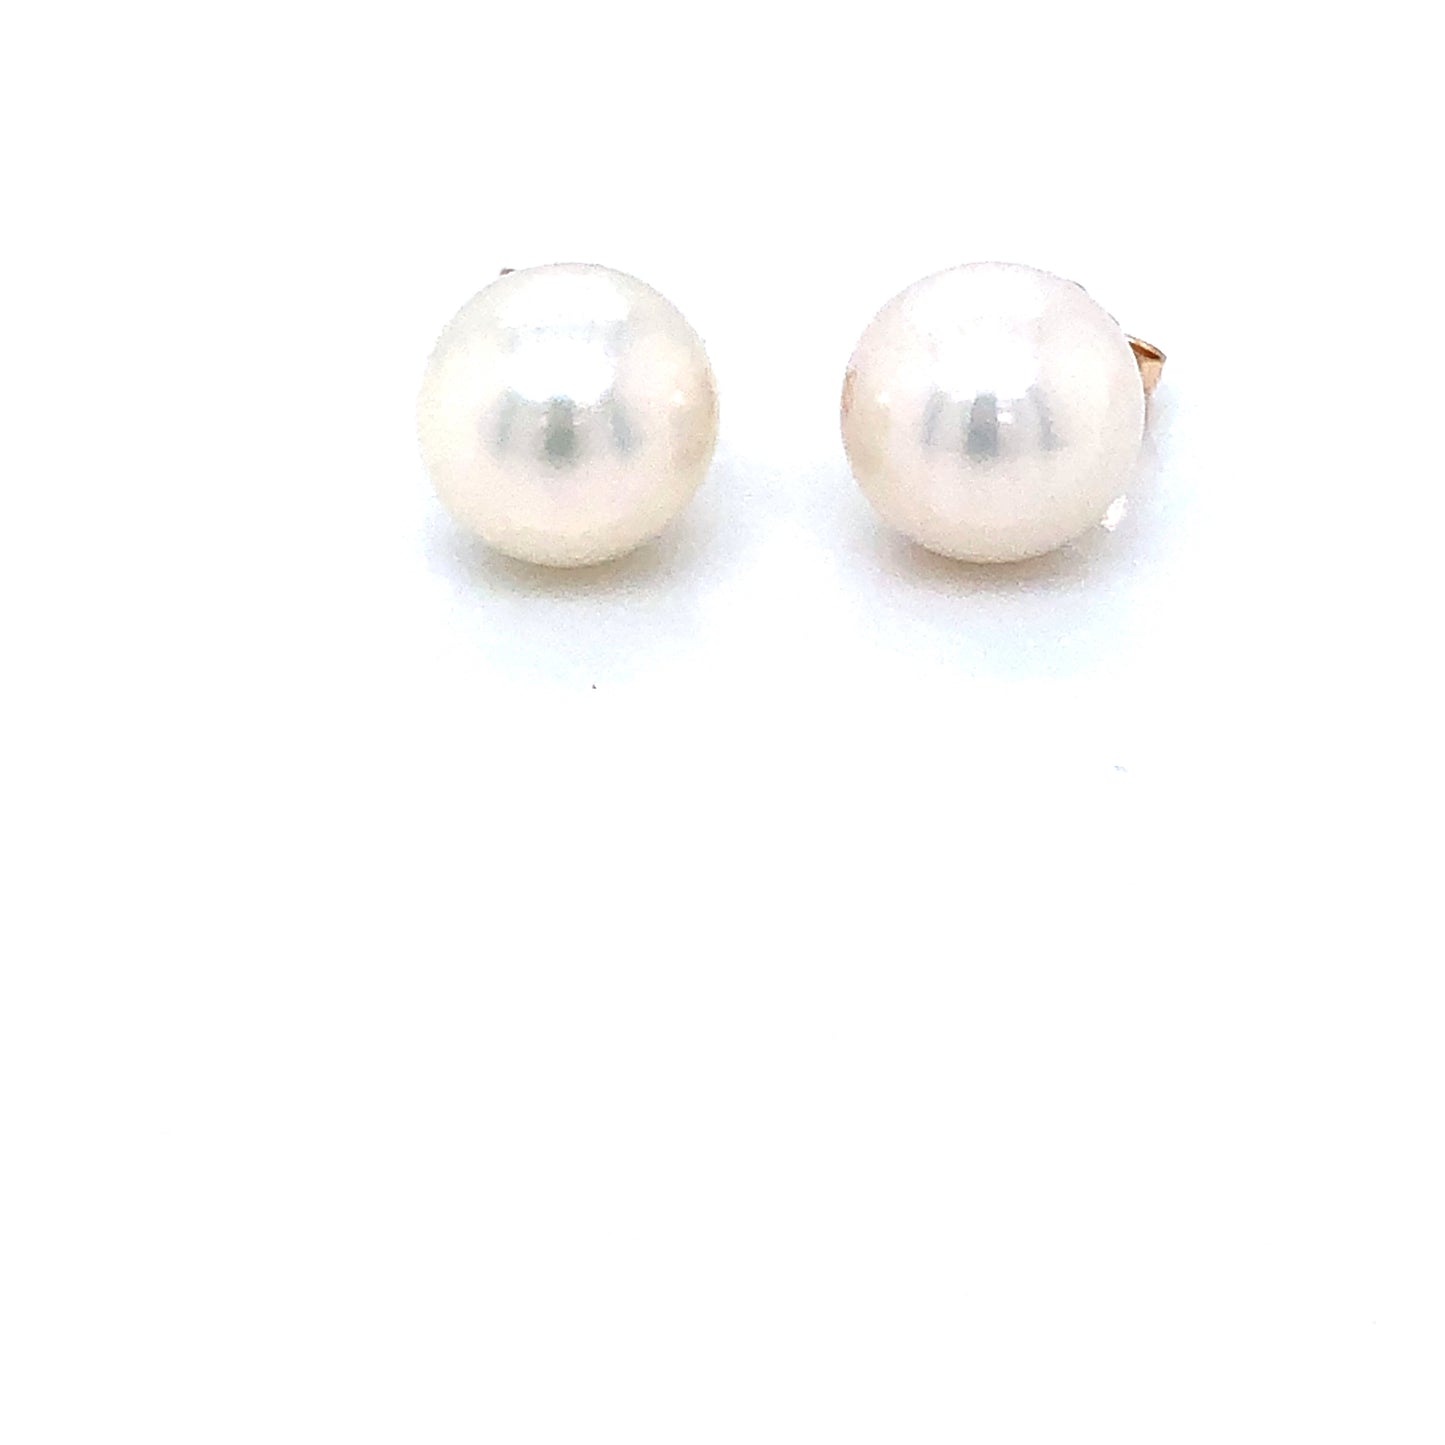 Freshwater Pearl 8-8.5mm 9ct Gold Stud Earrings